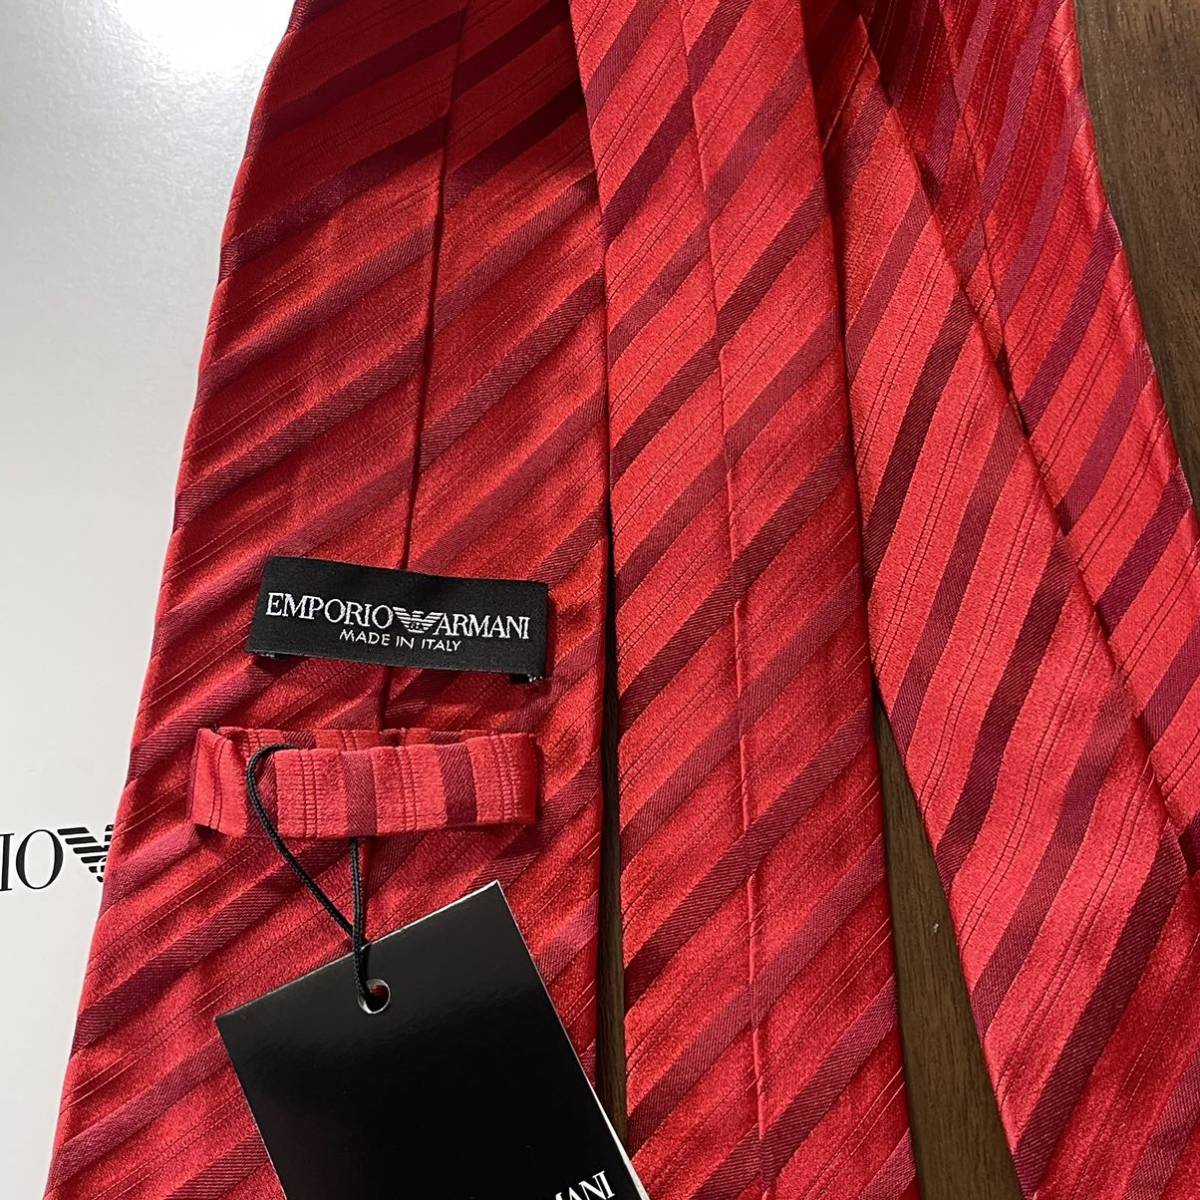 EMPORIO ARMANI( Emporio Armani ) red stripe necktie new goods unused tag attaching box attaching 